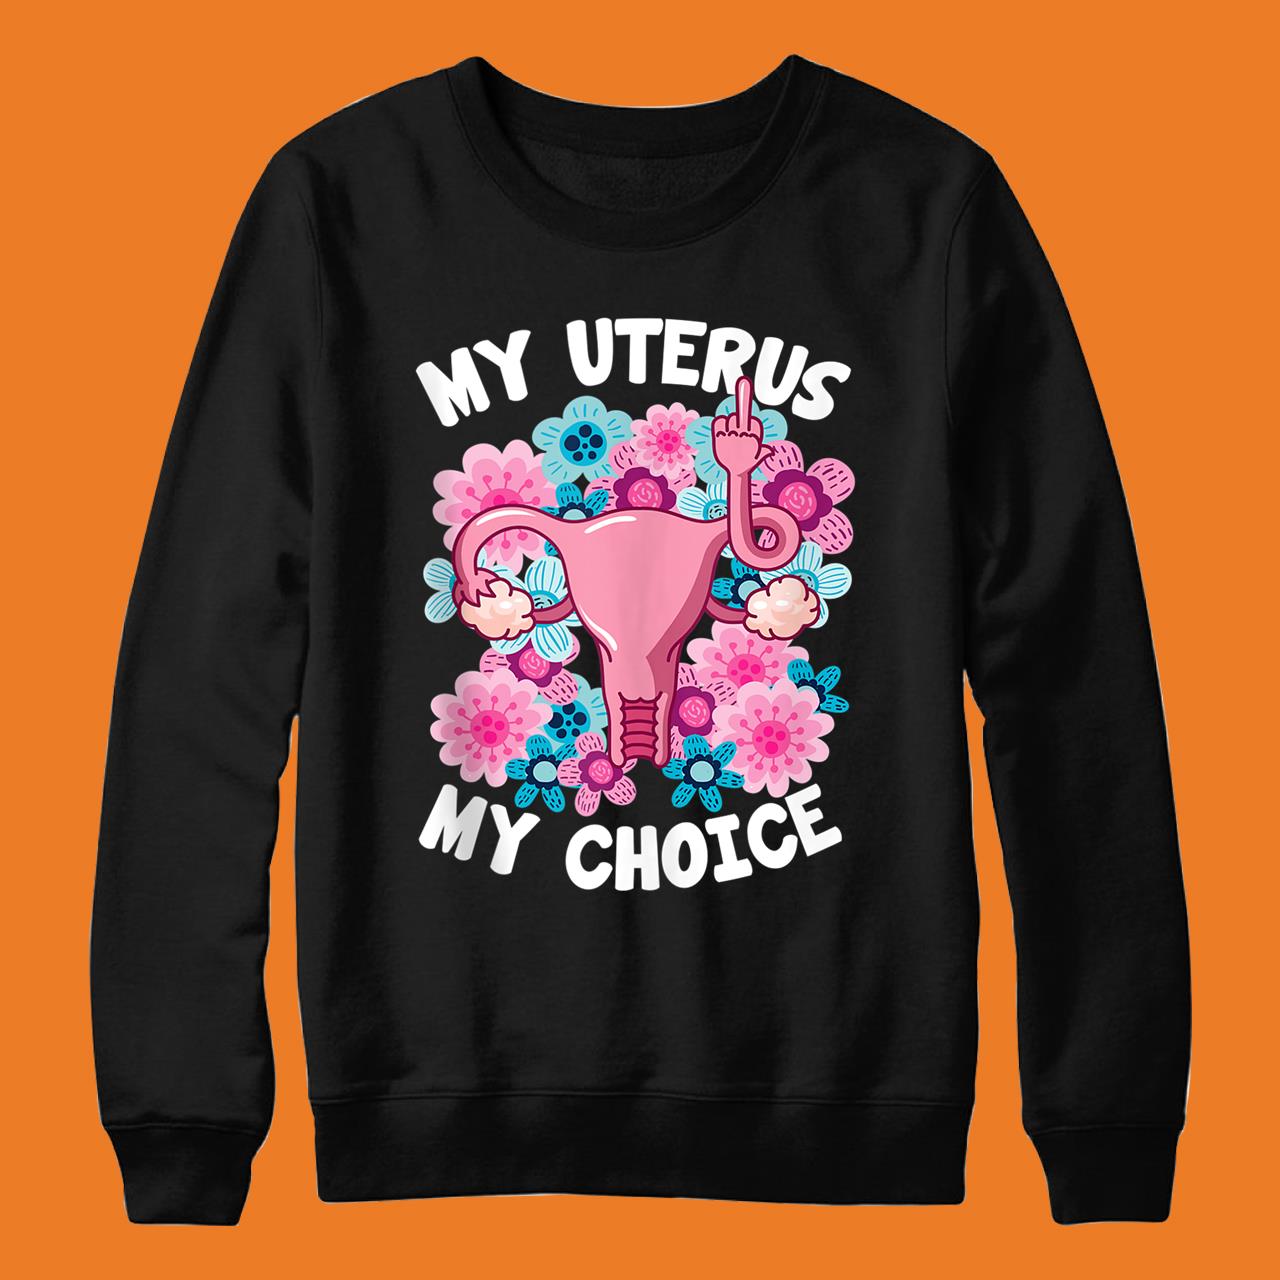 My Uterus My Choice Pro Choice Abortion Feminist Abortion Rights Shirts